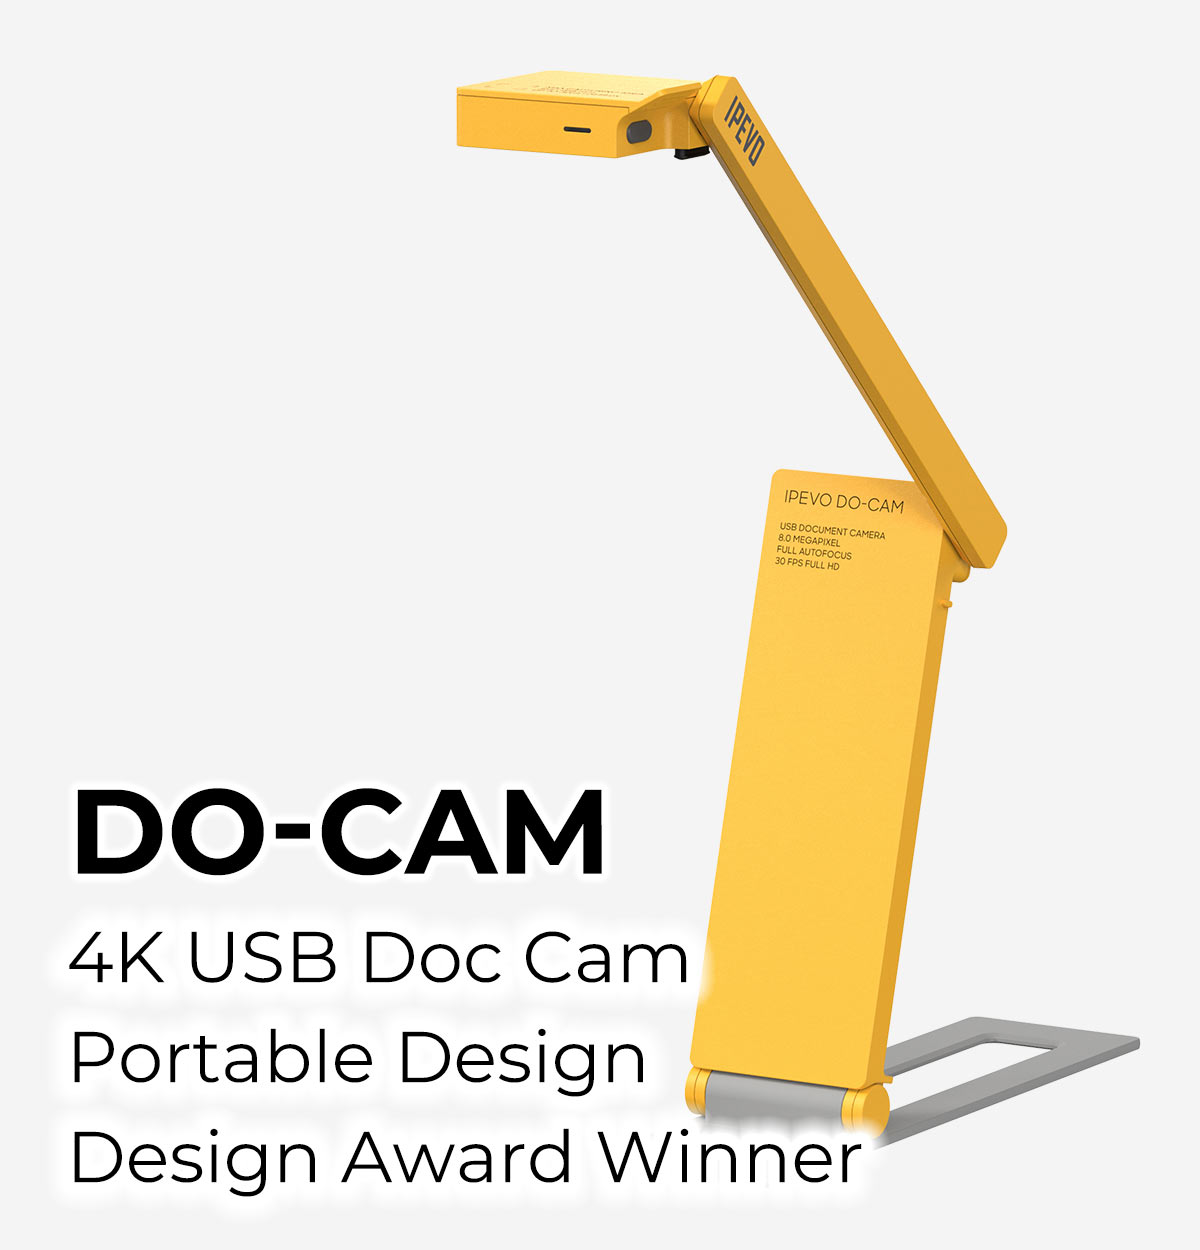 DO-CAM 4K USB Doc Cam Portable Design Design Award Winner